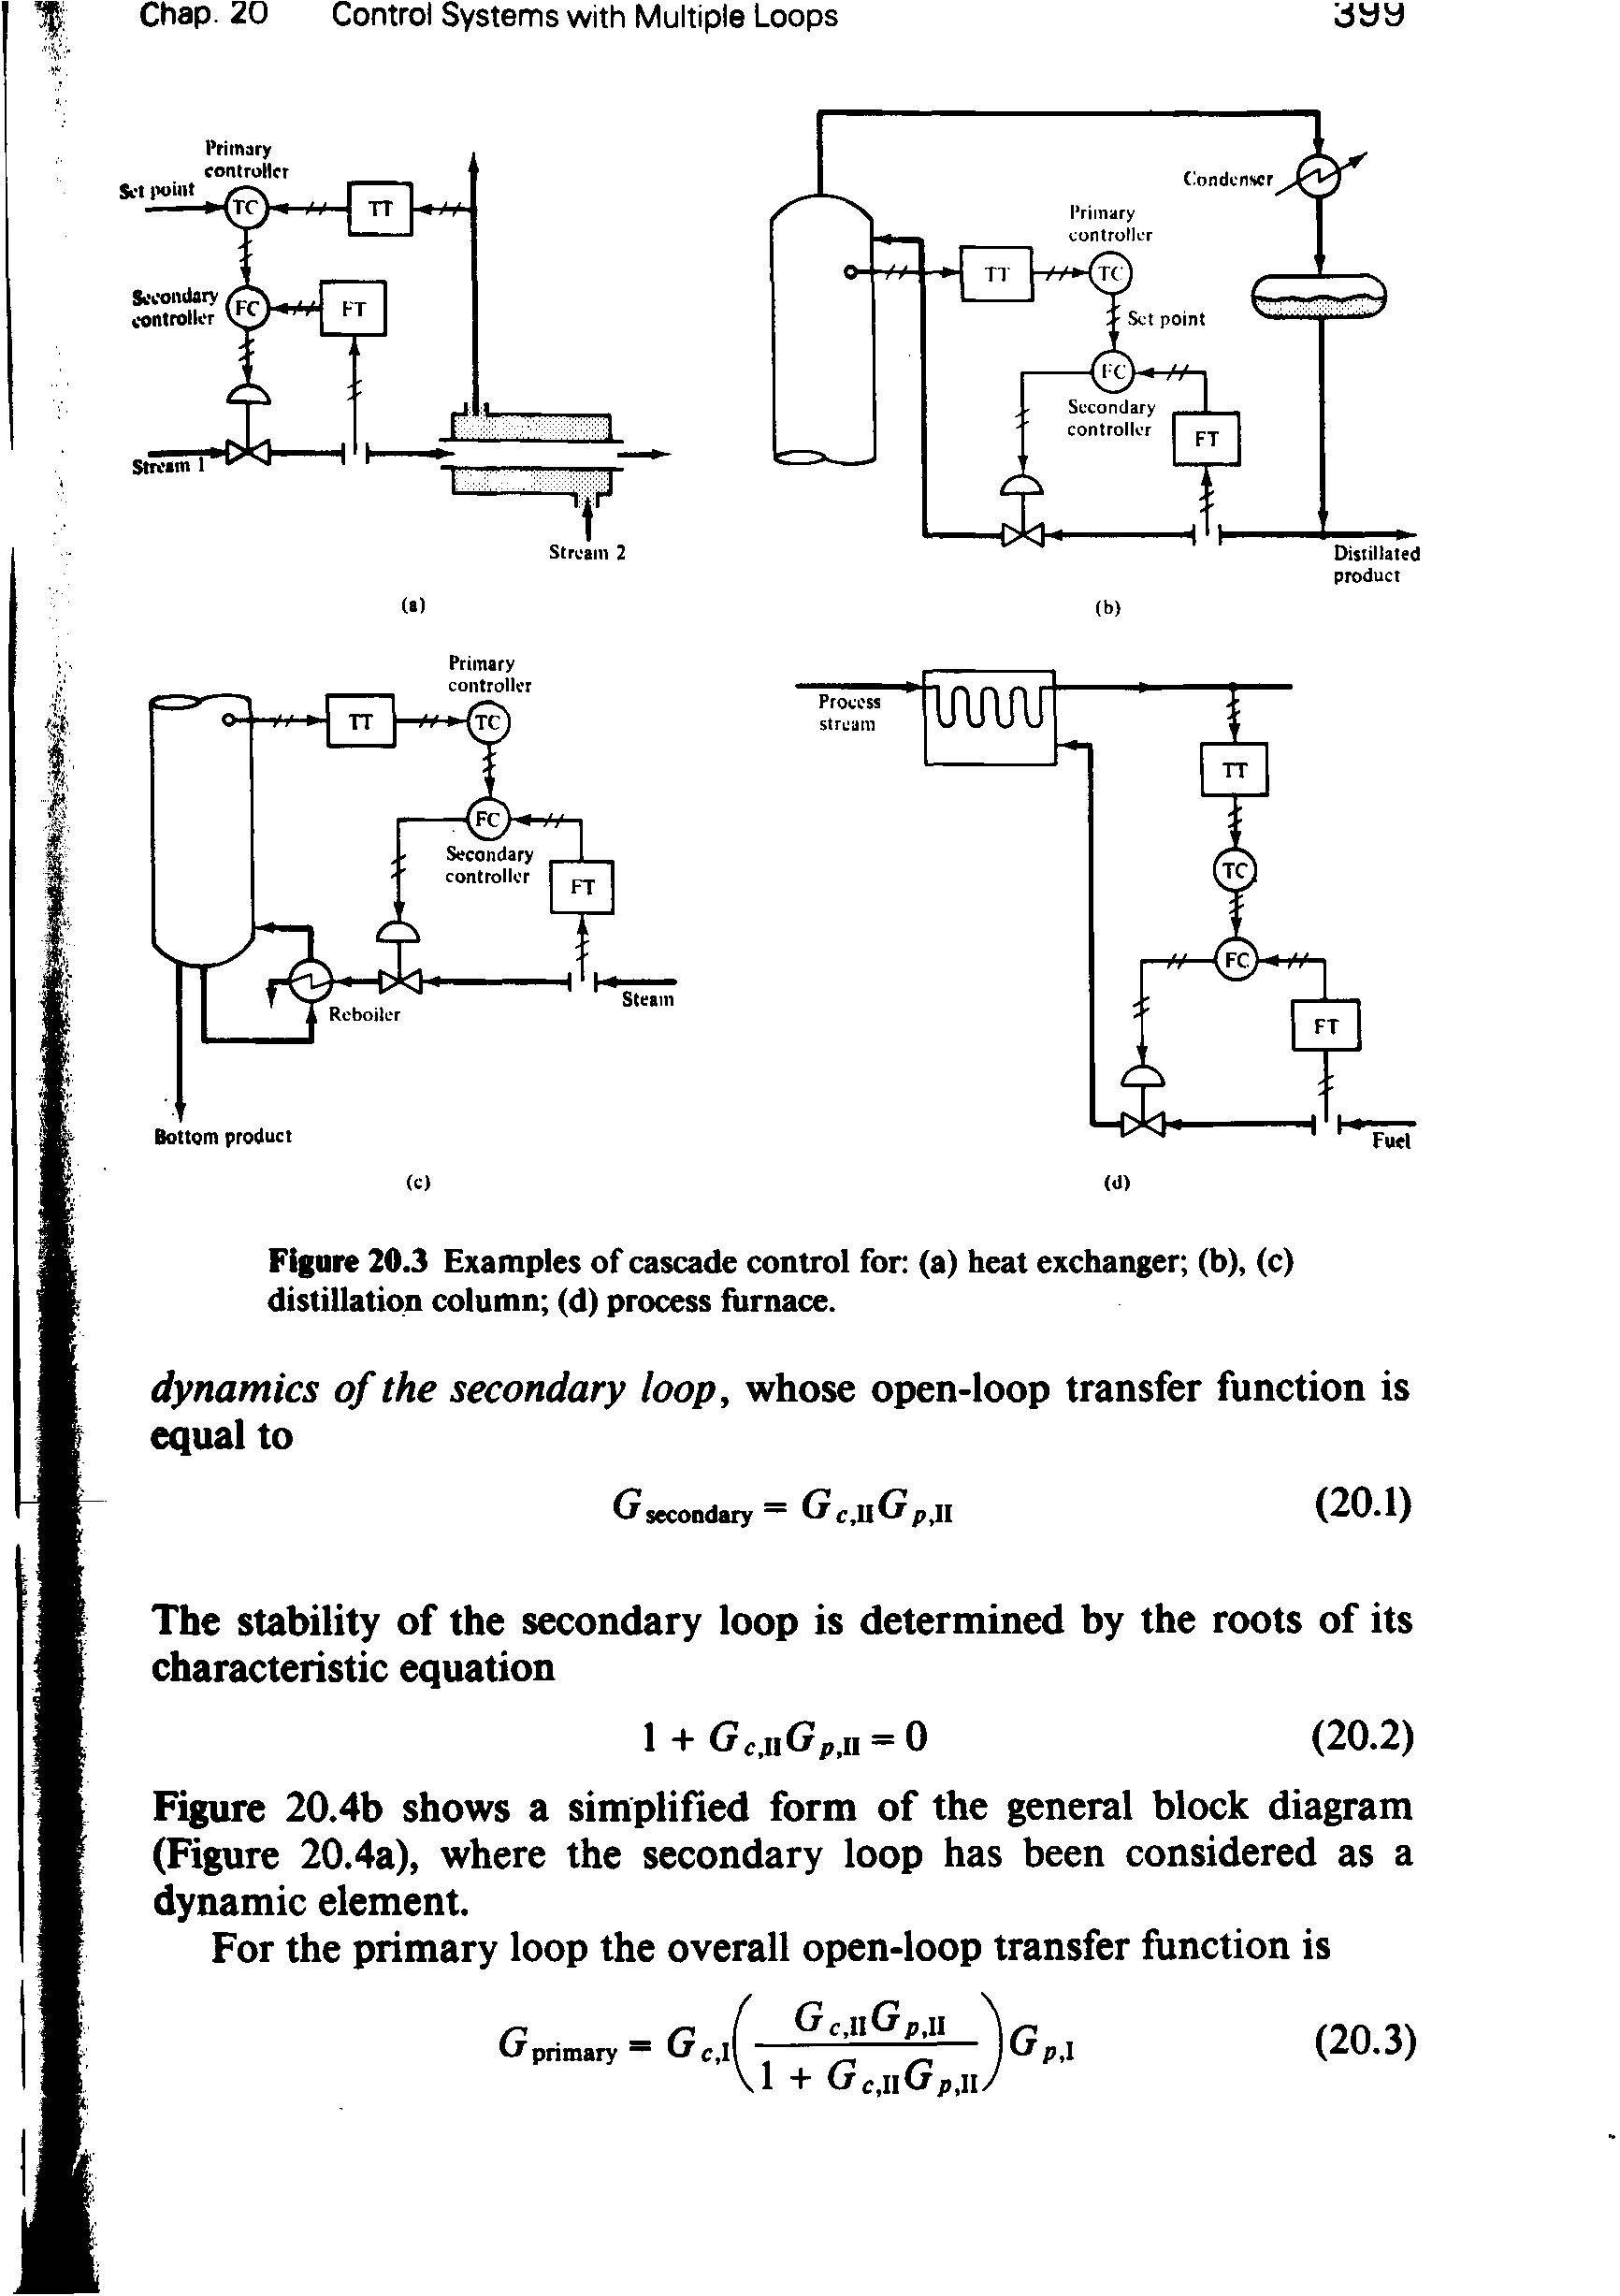 Figure 20.3 Examples of cascade control for (a) heat exchanger (b), (c) distillation column (d) process furnace.